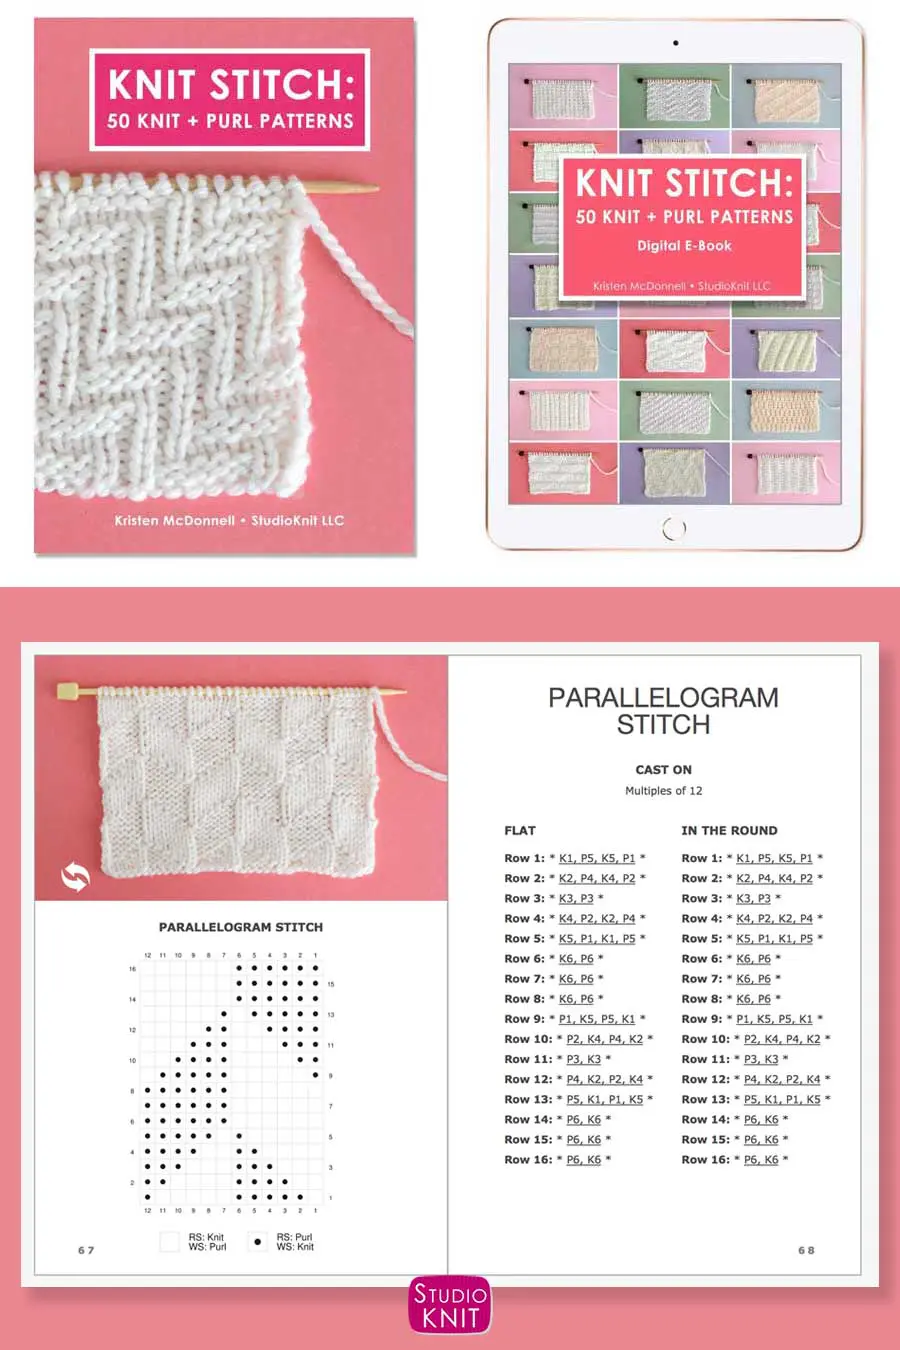 Knit Stitch Pattern Book with Parallelogram Stitch Pattern